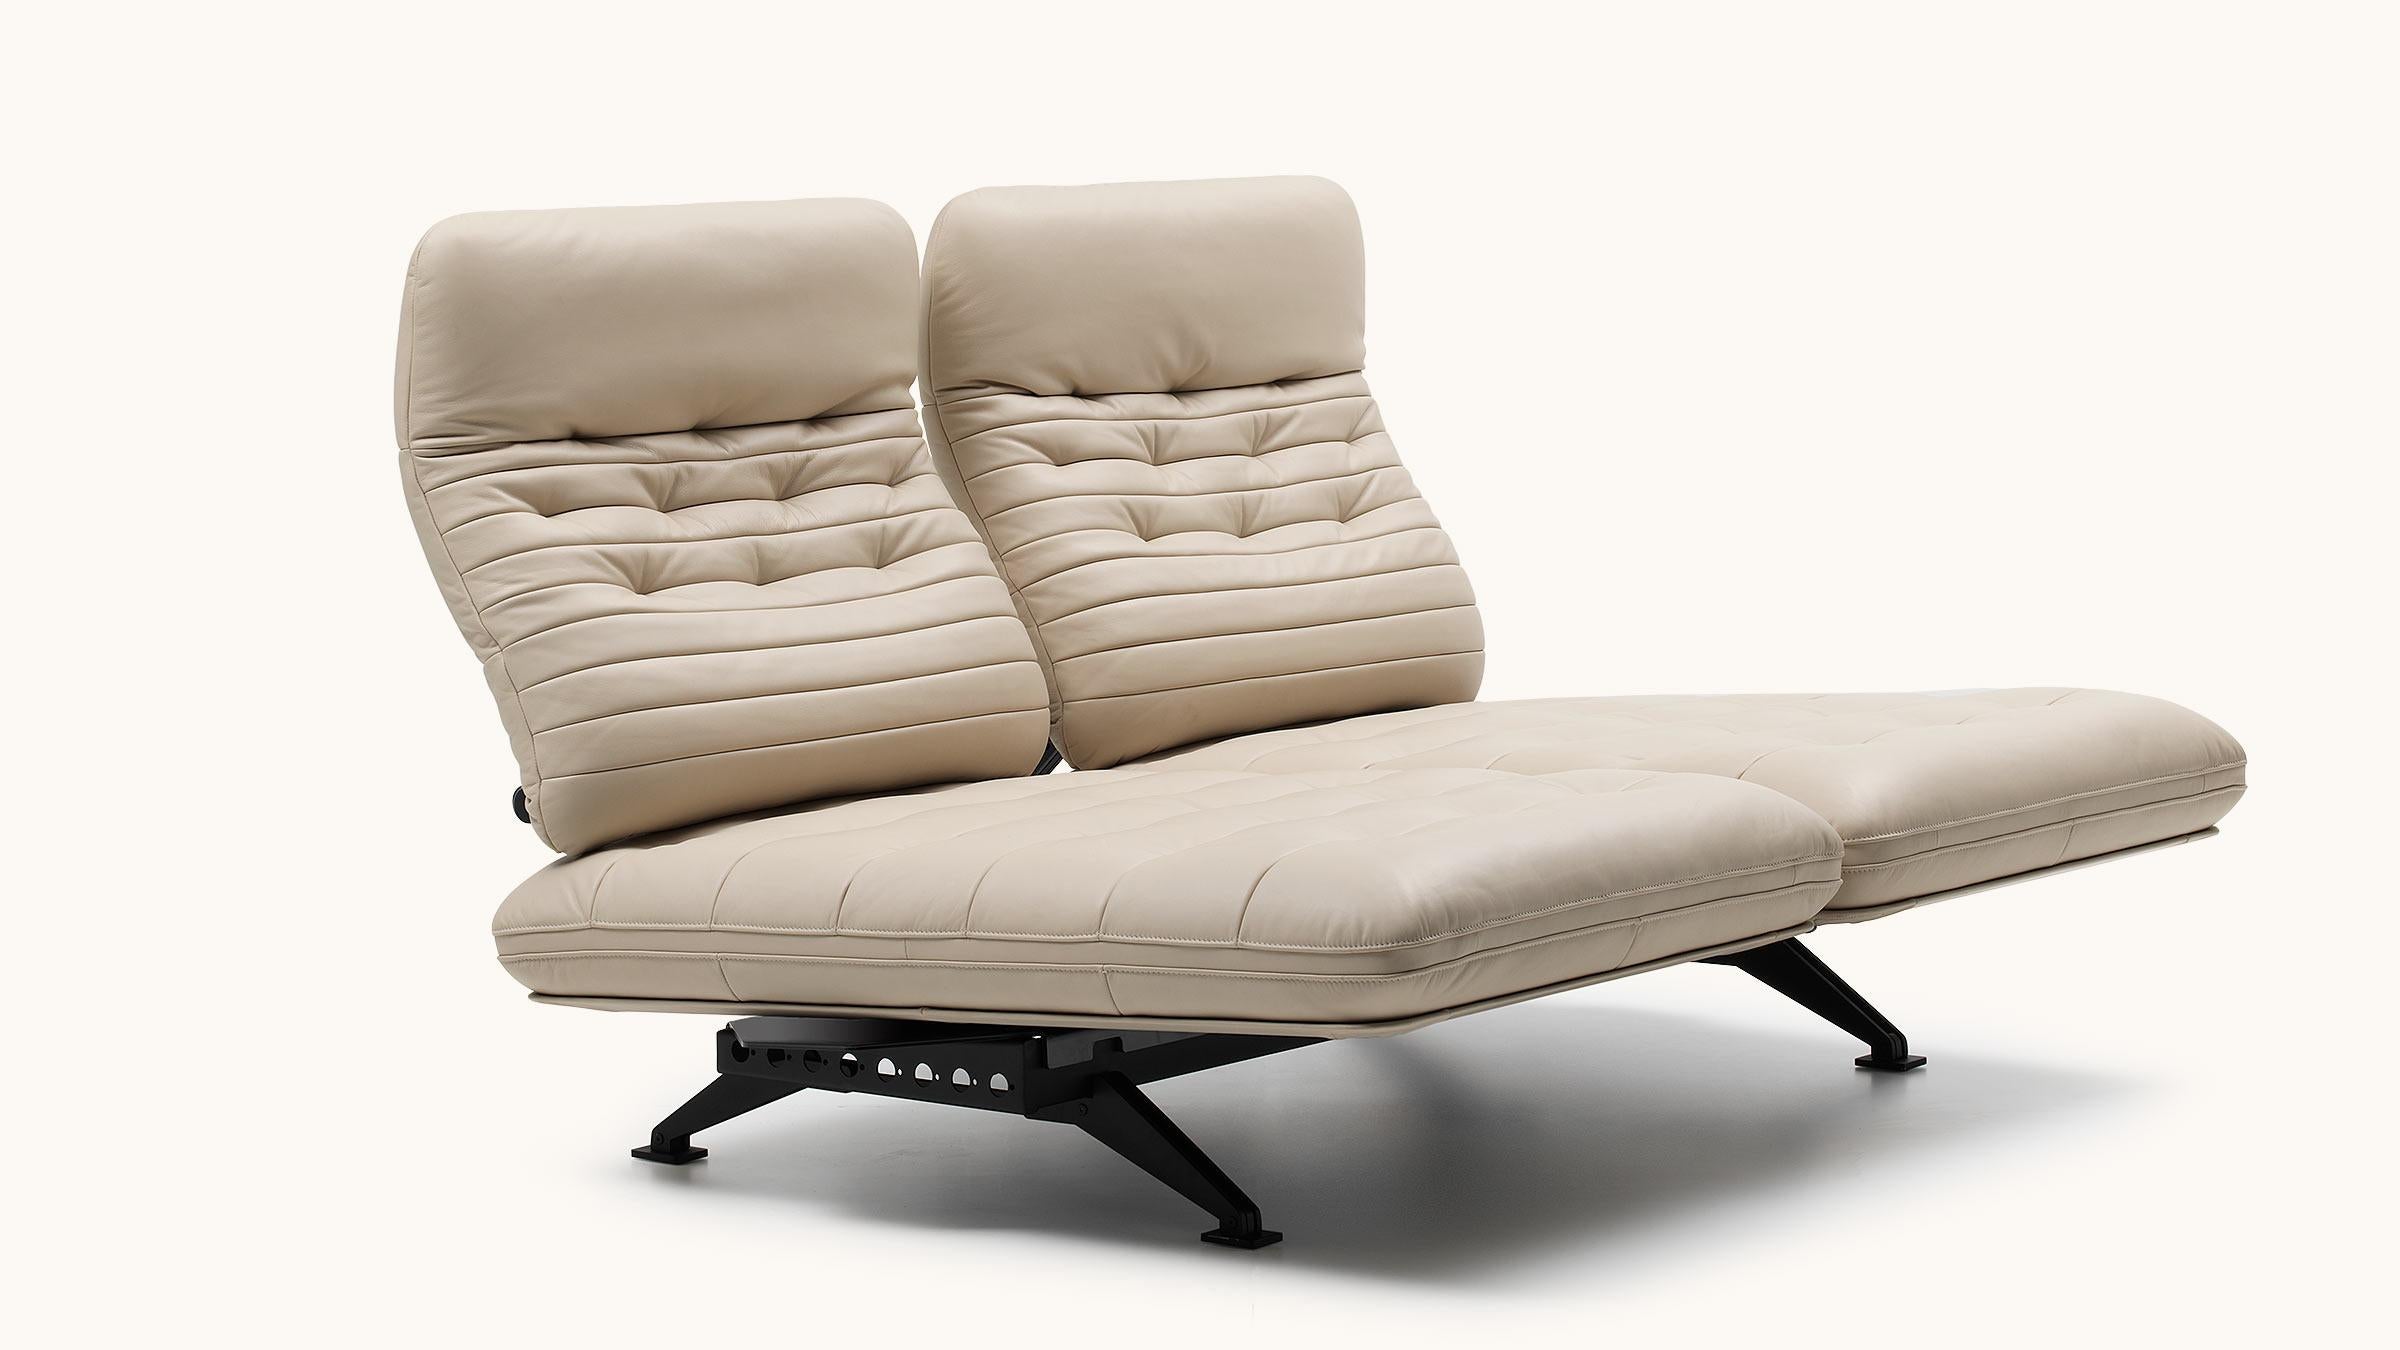 Contemporary De Sede Ds-490 Modular Sofa in Off-White Upholstery by De Sede Design Team For Sale